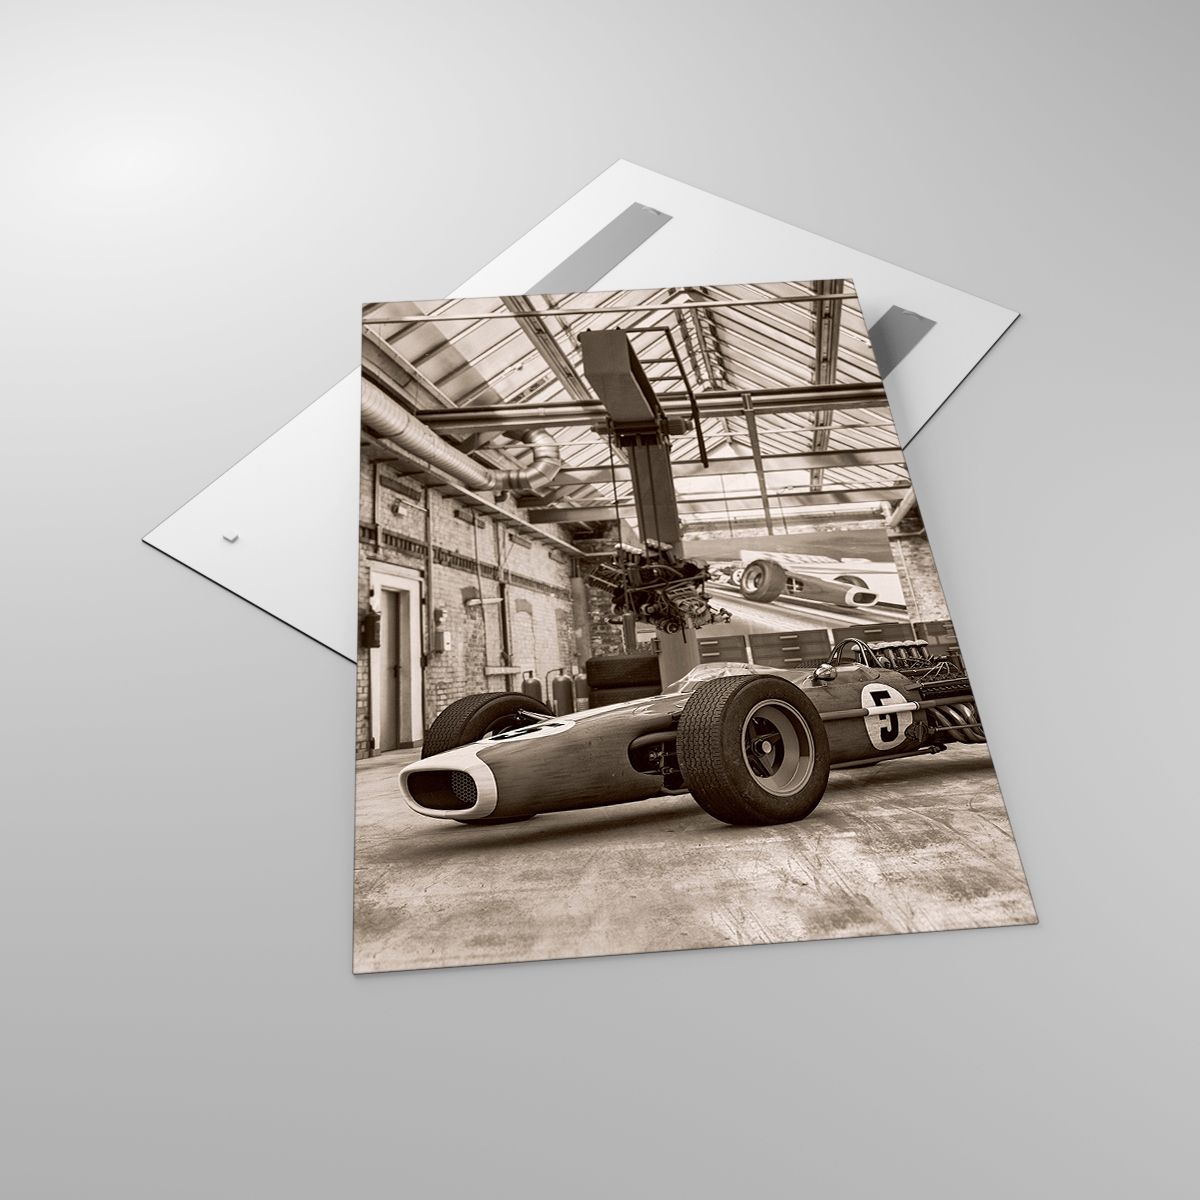 Bild på glas Formel 1, Bild på glas Retro, Bild på glas Bil, Bild på glas Bilgarage, Bild på glas Sport